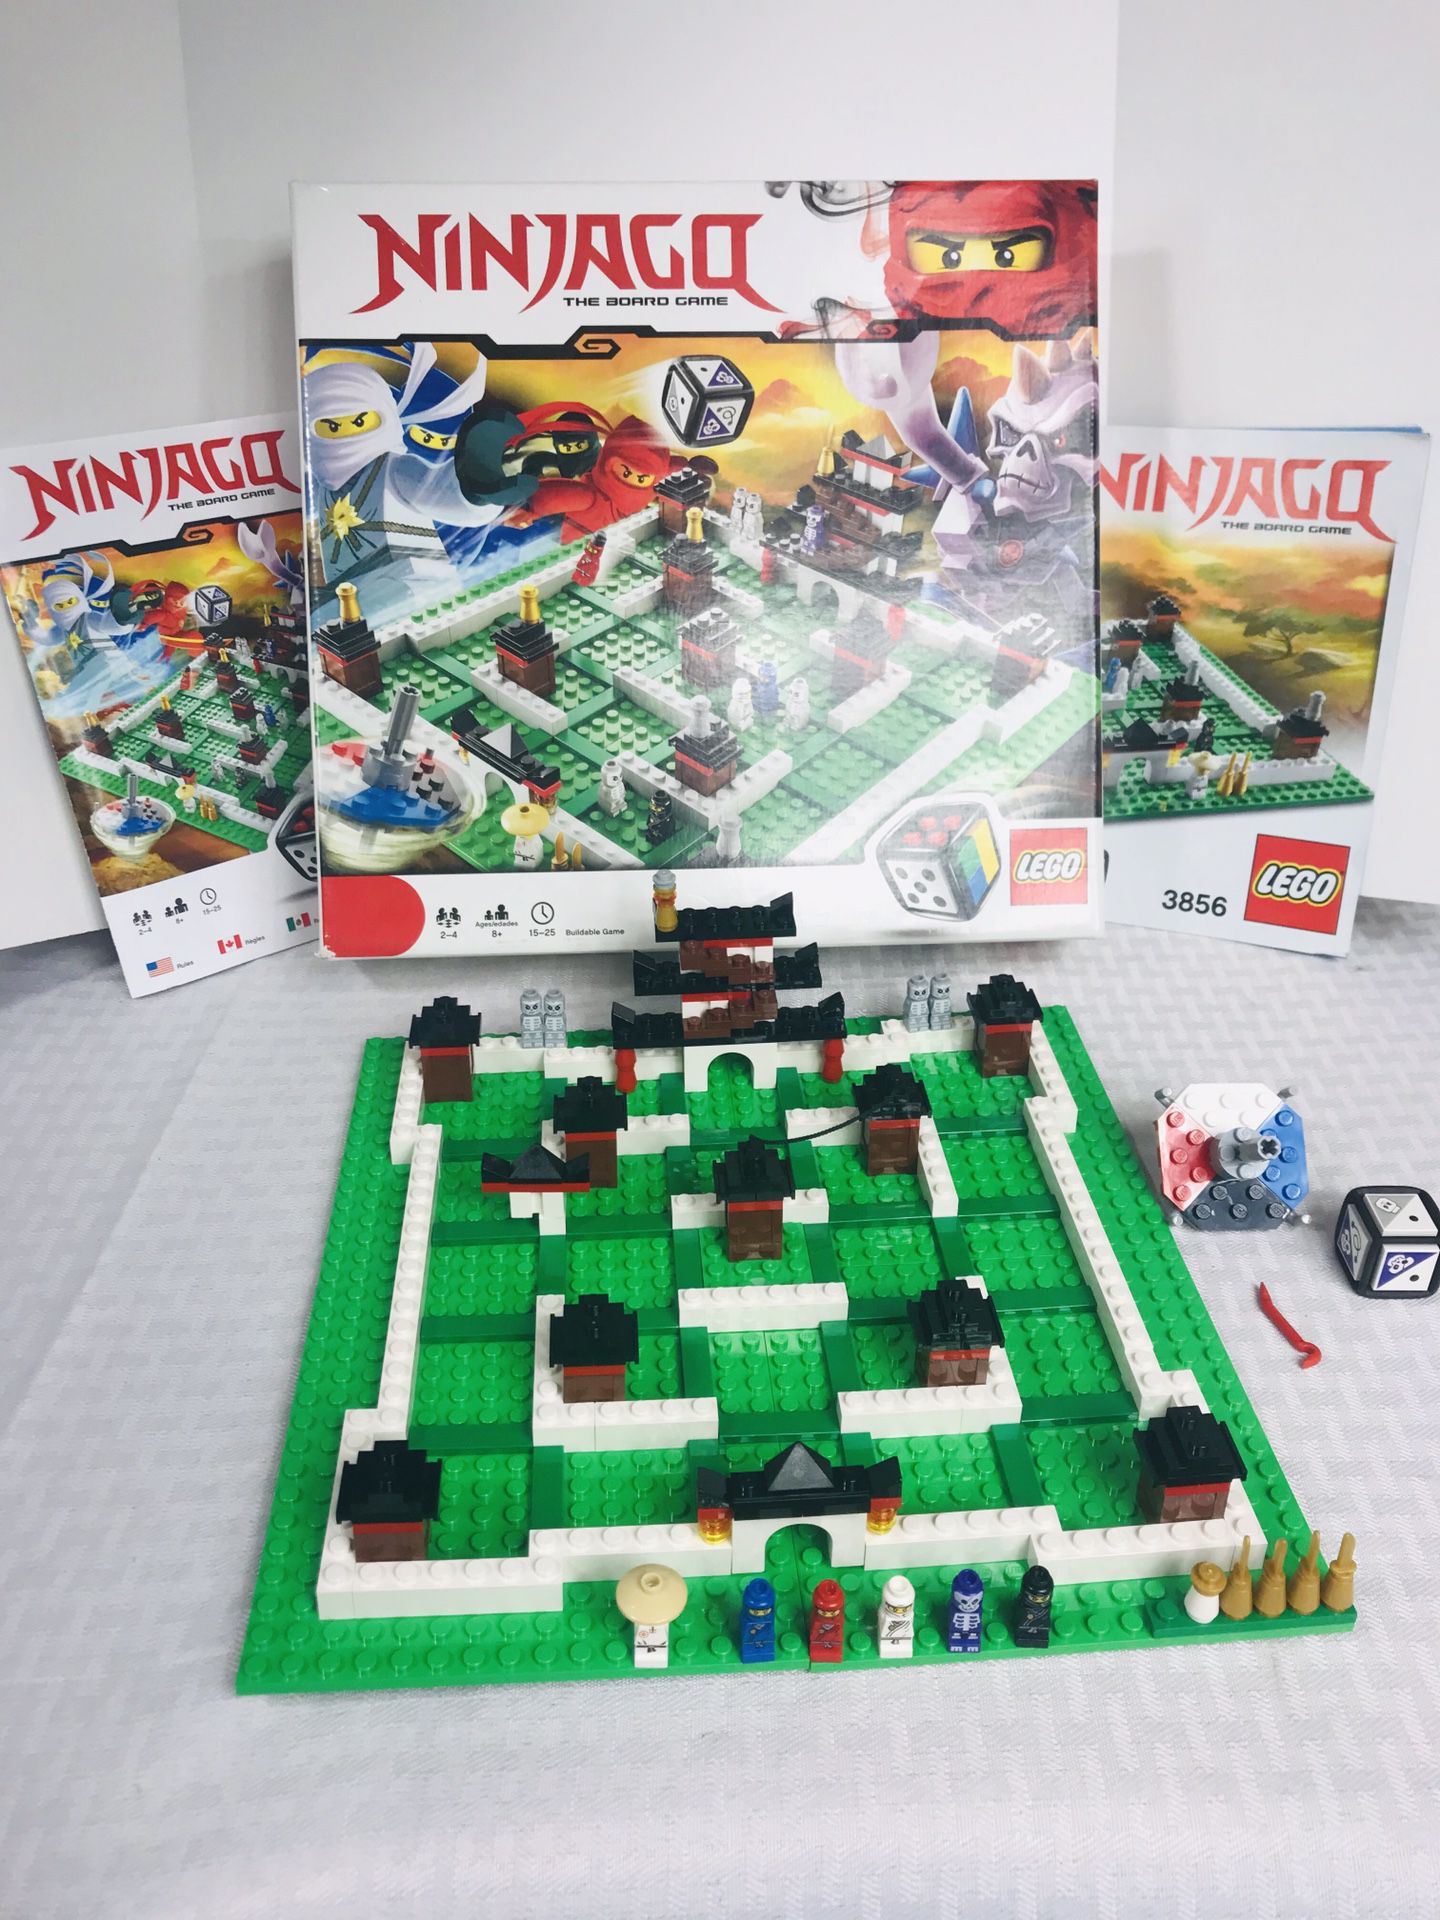 Lego Ninjago Building Set Board Game #3856